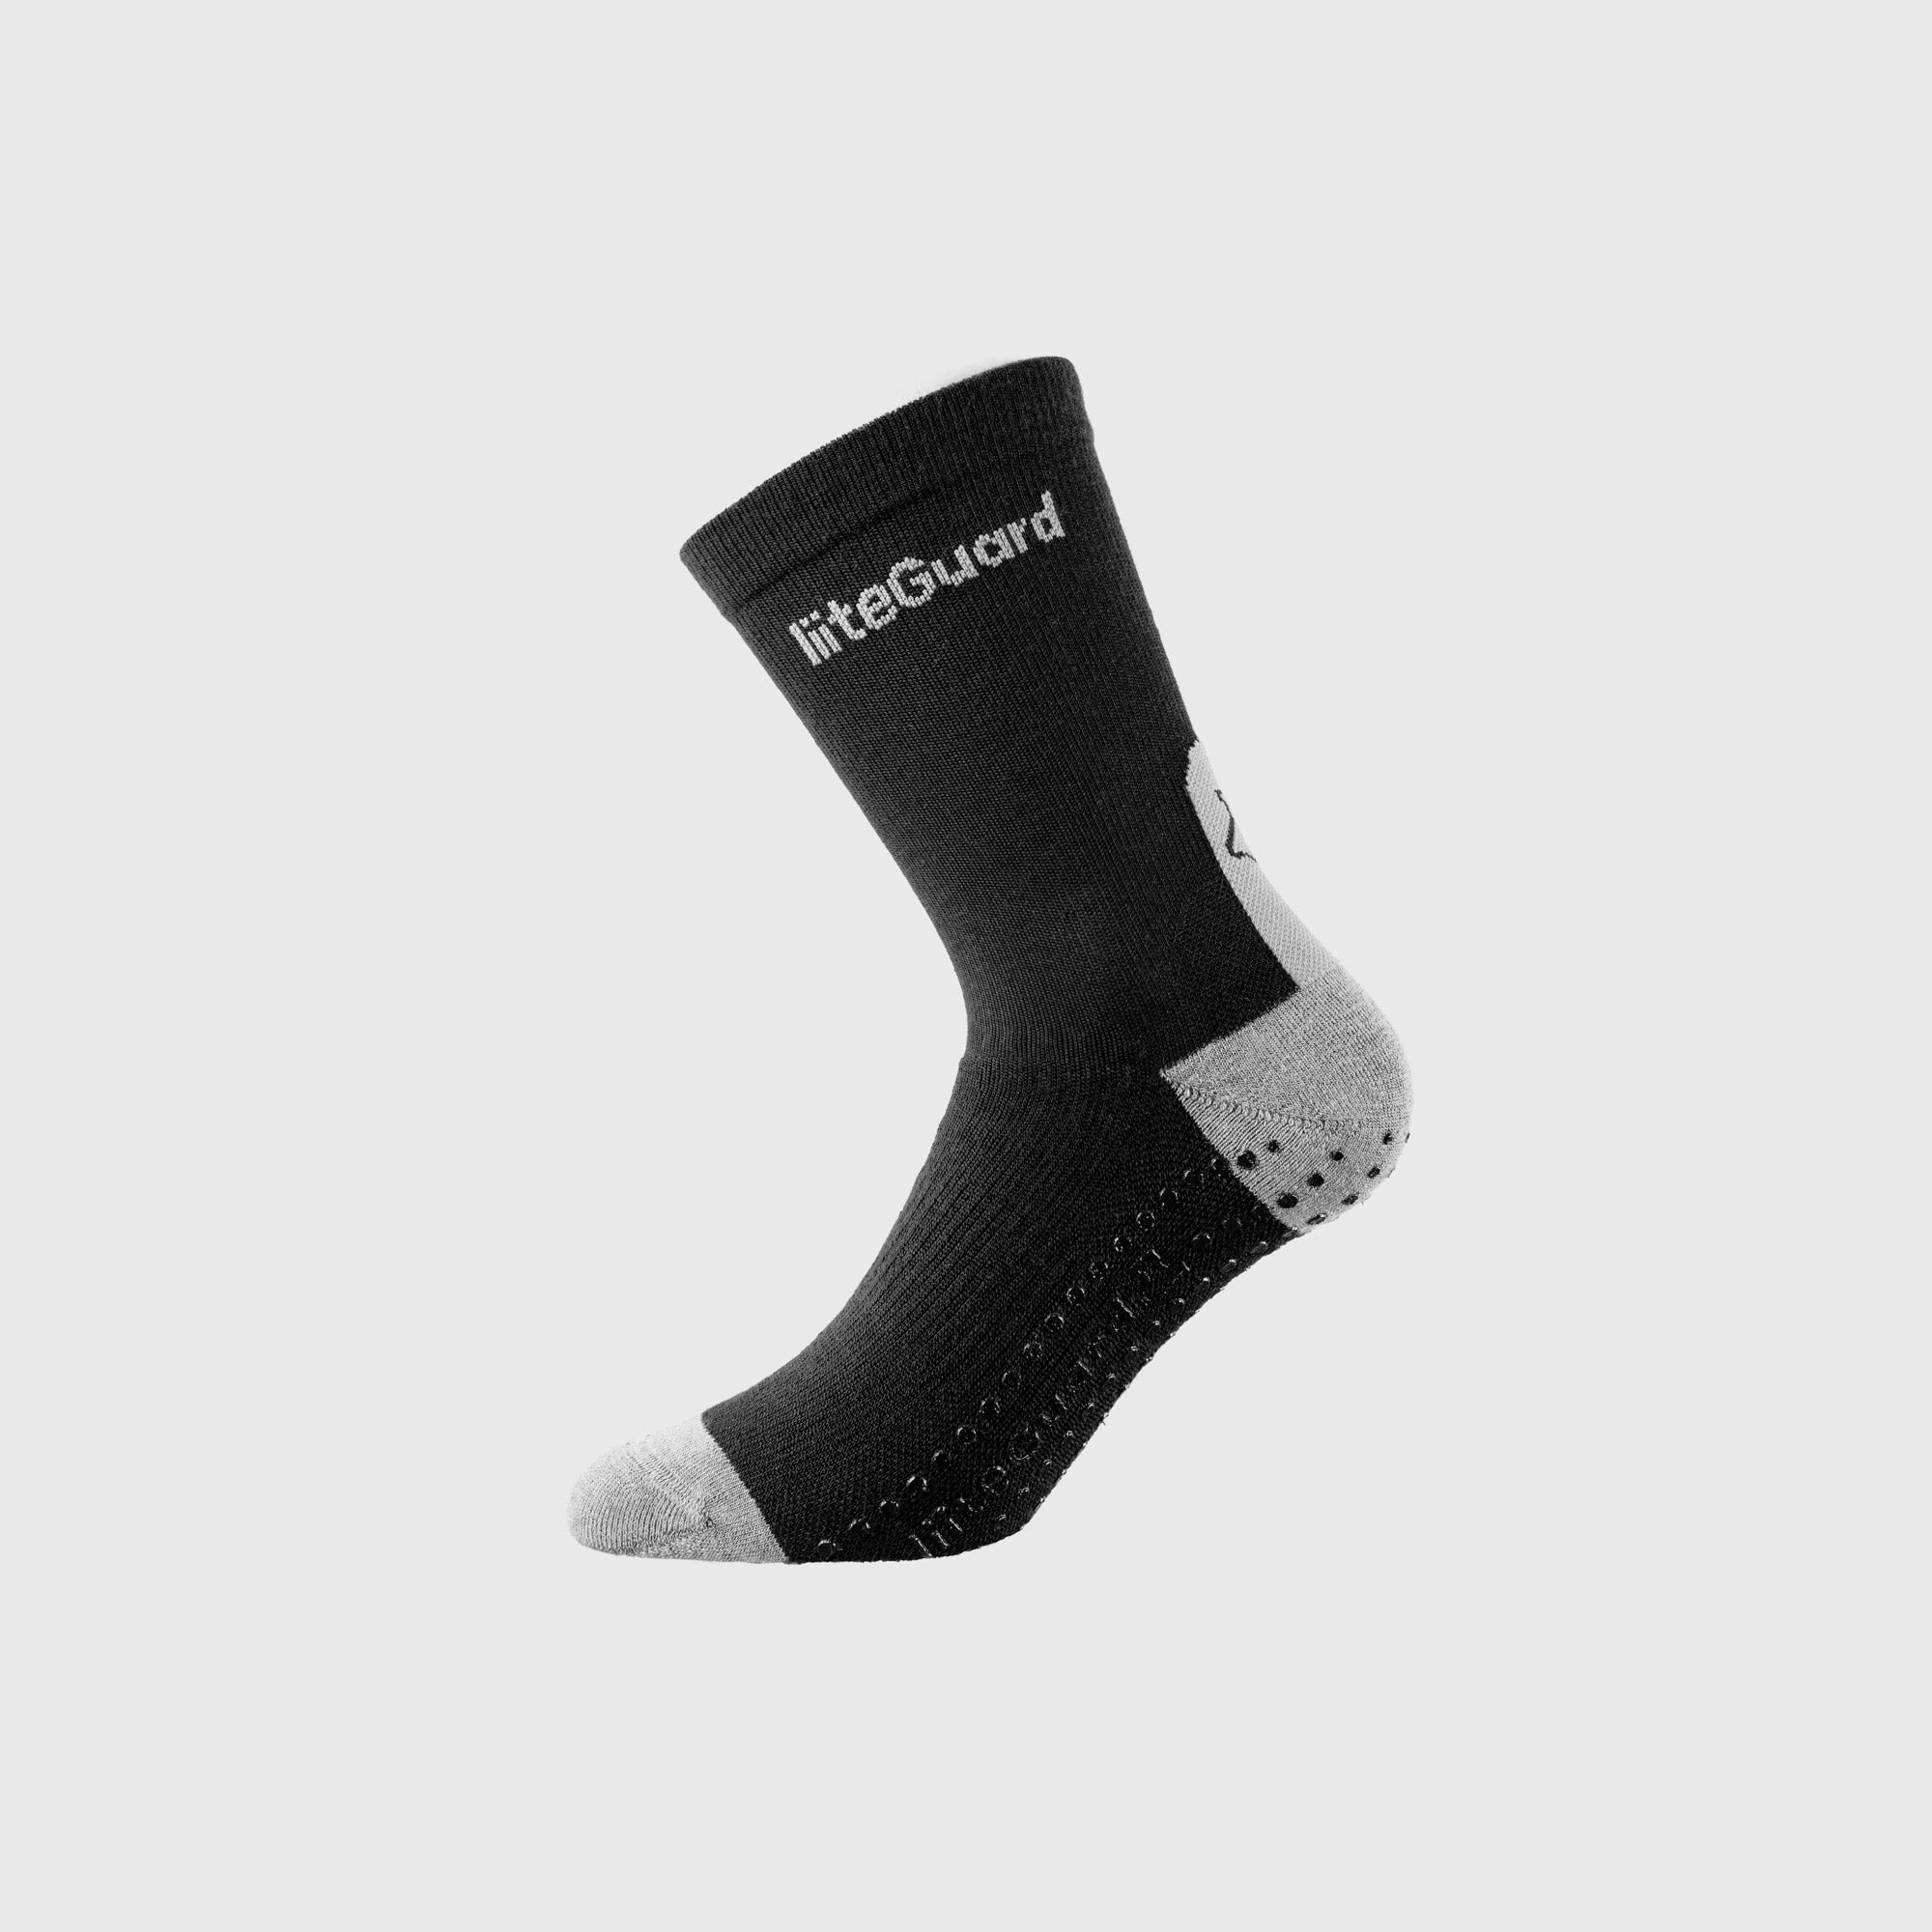 Liiteguard MERINO PRO-TECH Medium socks BLACK